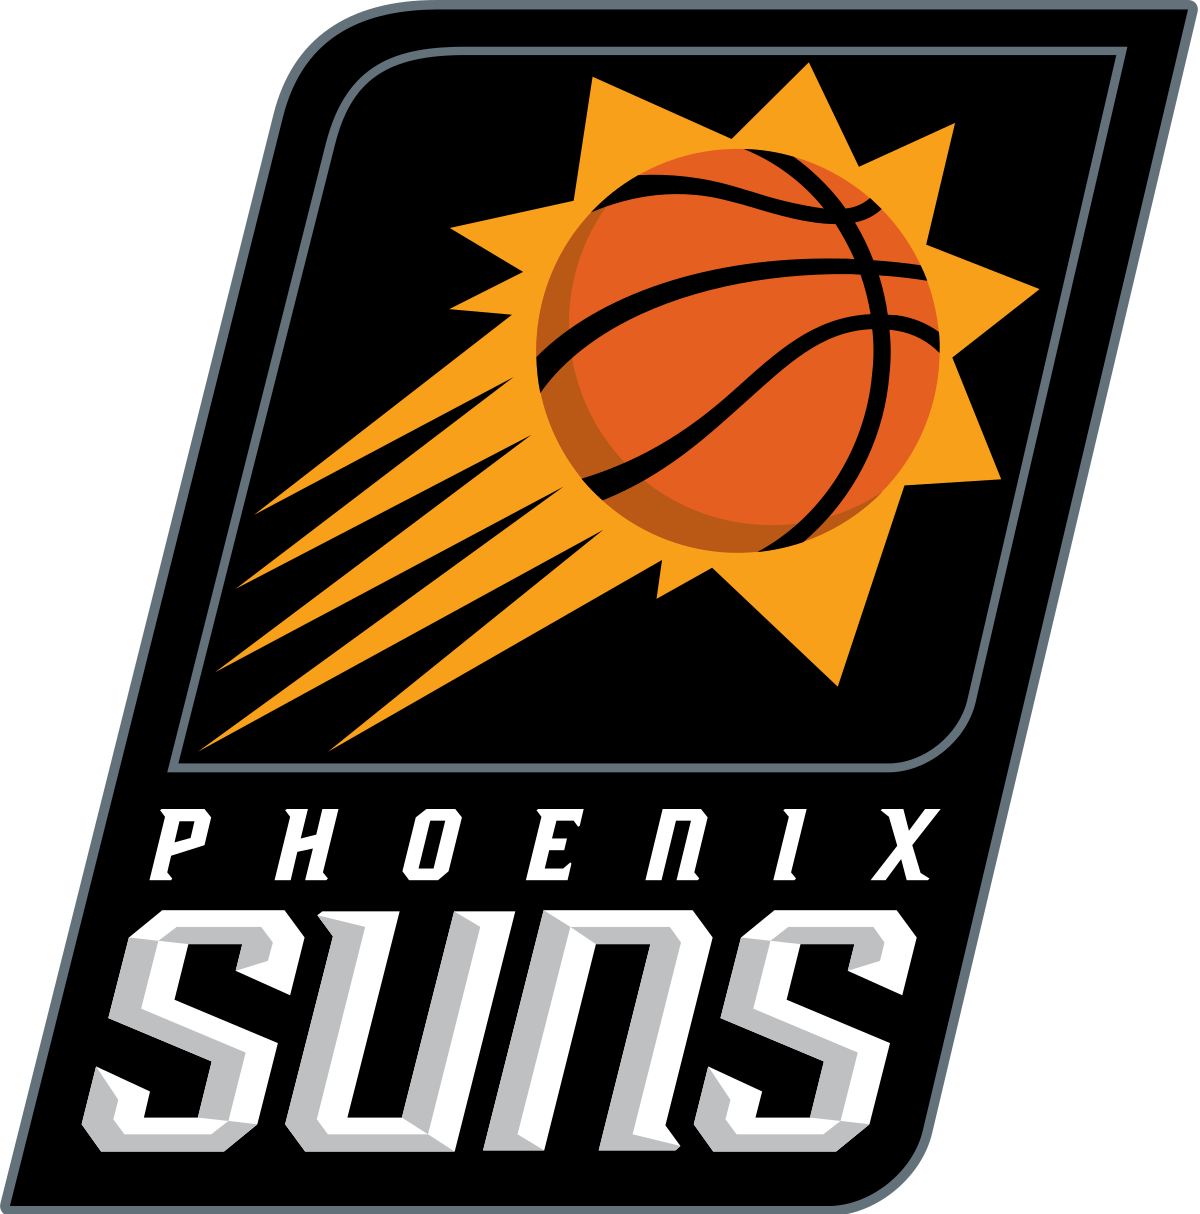 Phoenix Suns defeat Golden State Warriors 130-119 despite Steph Curry's 50-point outburst.